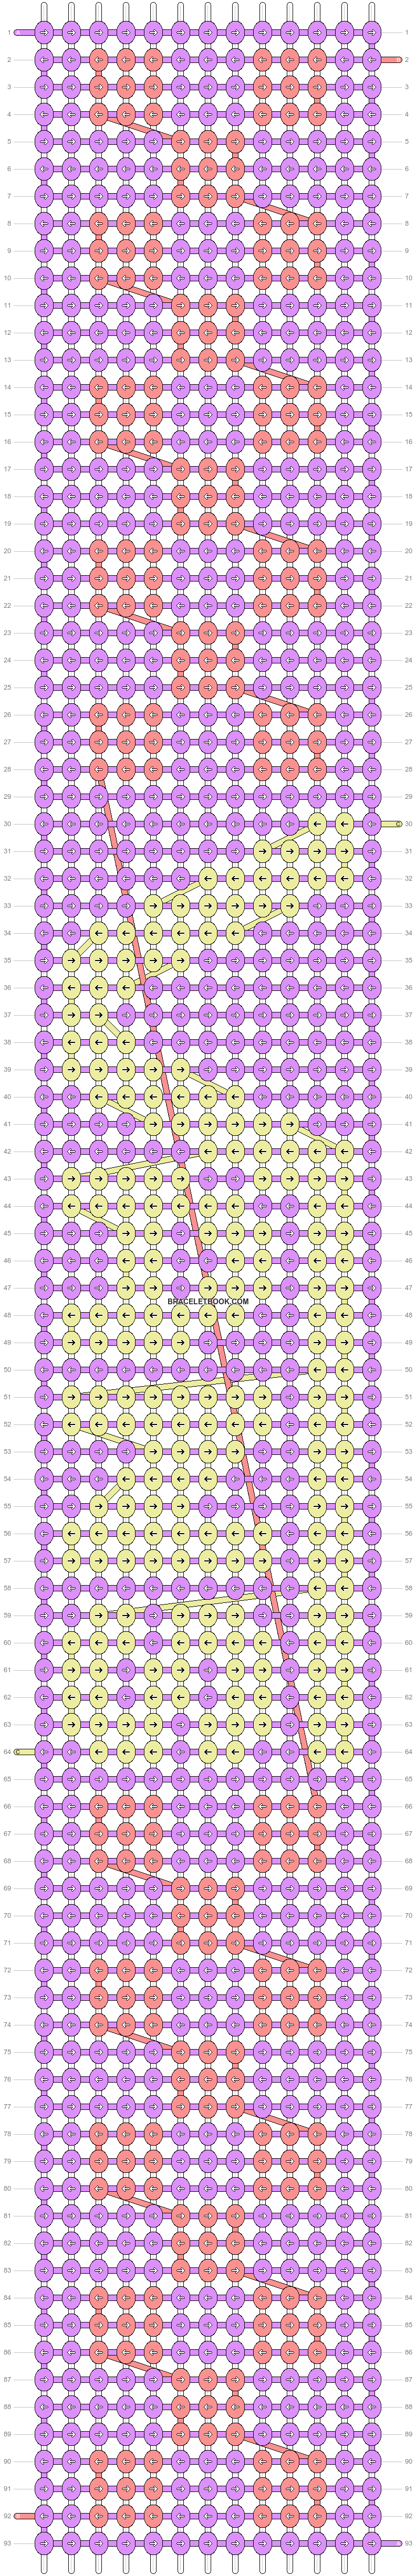 Alpha pattern #44004 variation #67444 pattern